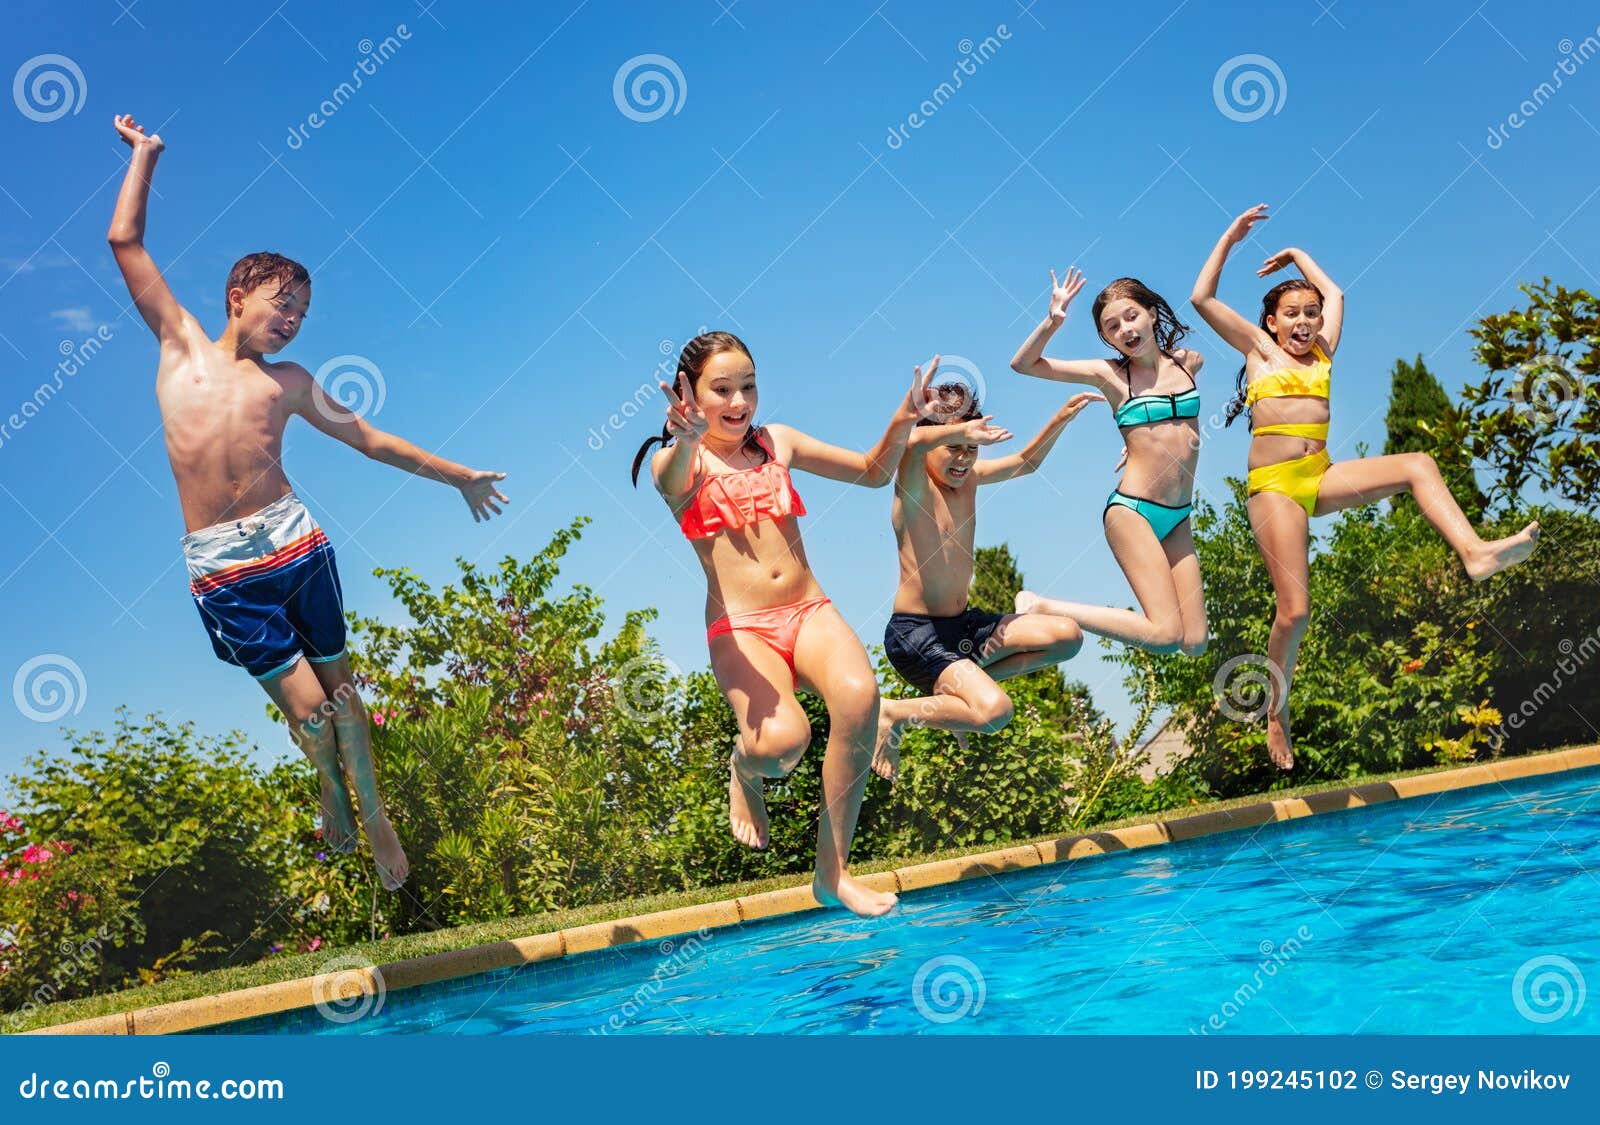 fun in the pool group of kids jump inside water